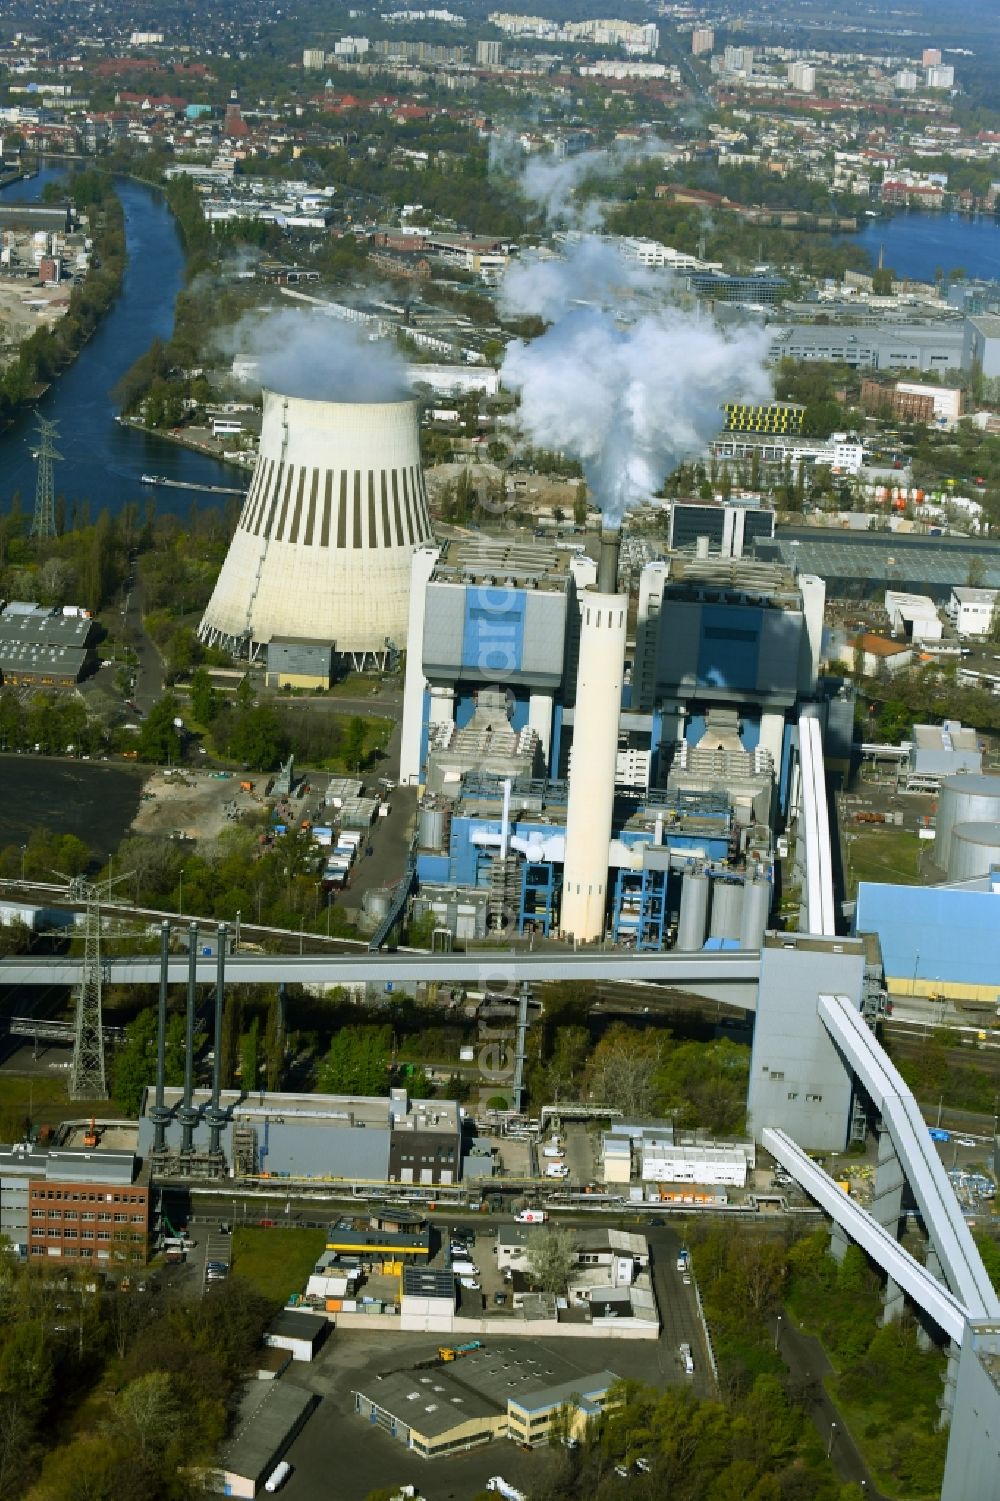 Berlin from above - Power plants and exhaust gas towers of the thermal power plant - Kraftwerk Reuter West Grosser Spreering in Berlin, Germany